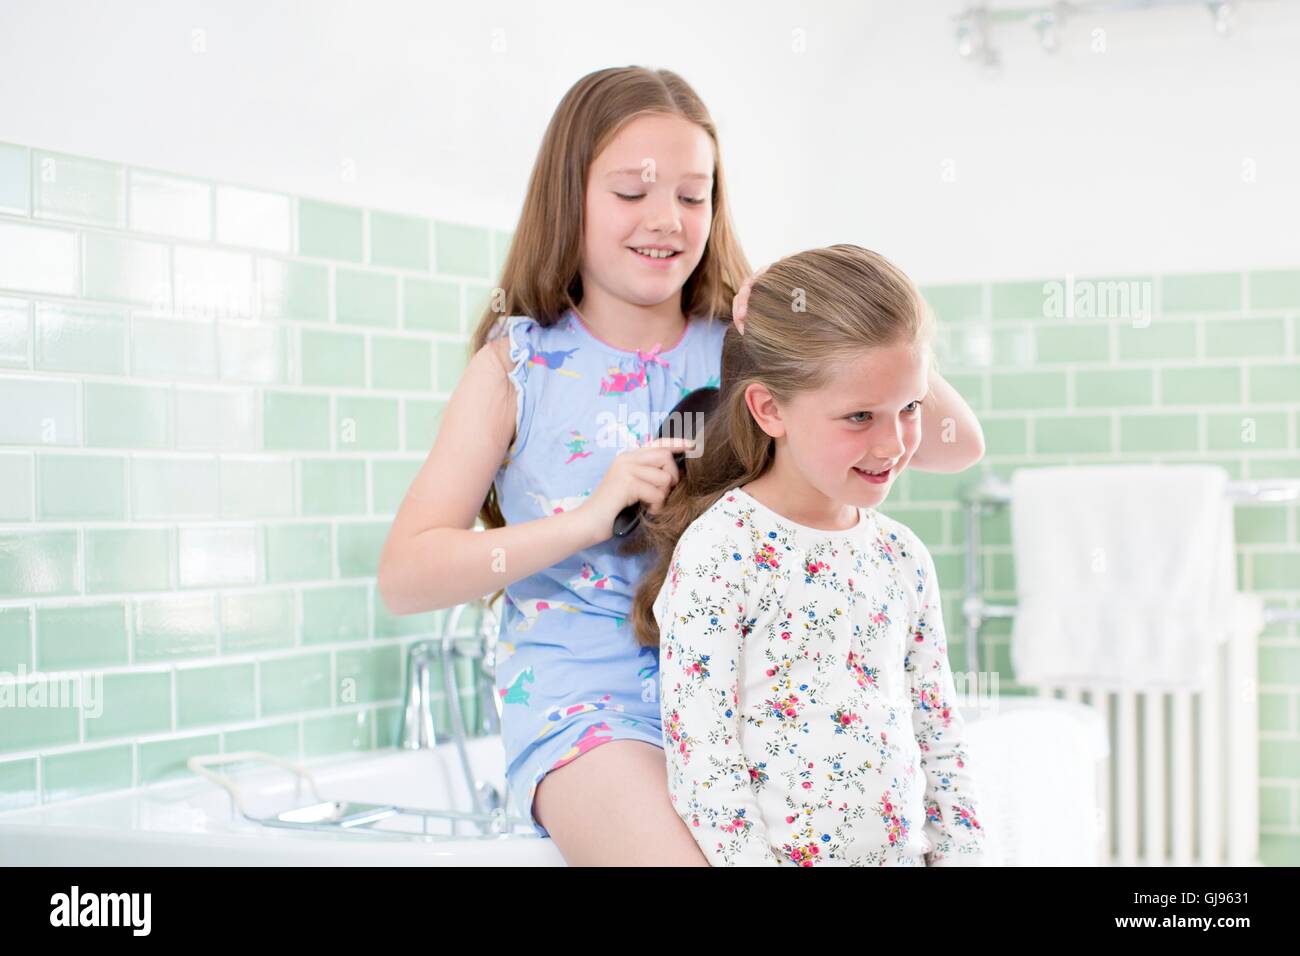 PROPERTY RELEASED. MODEL RELEASED. Big sister brushing little sister's hair in bathroom. Stock Photo